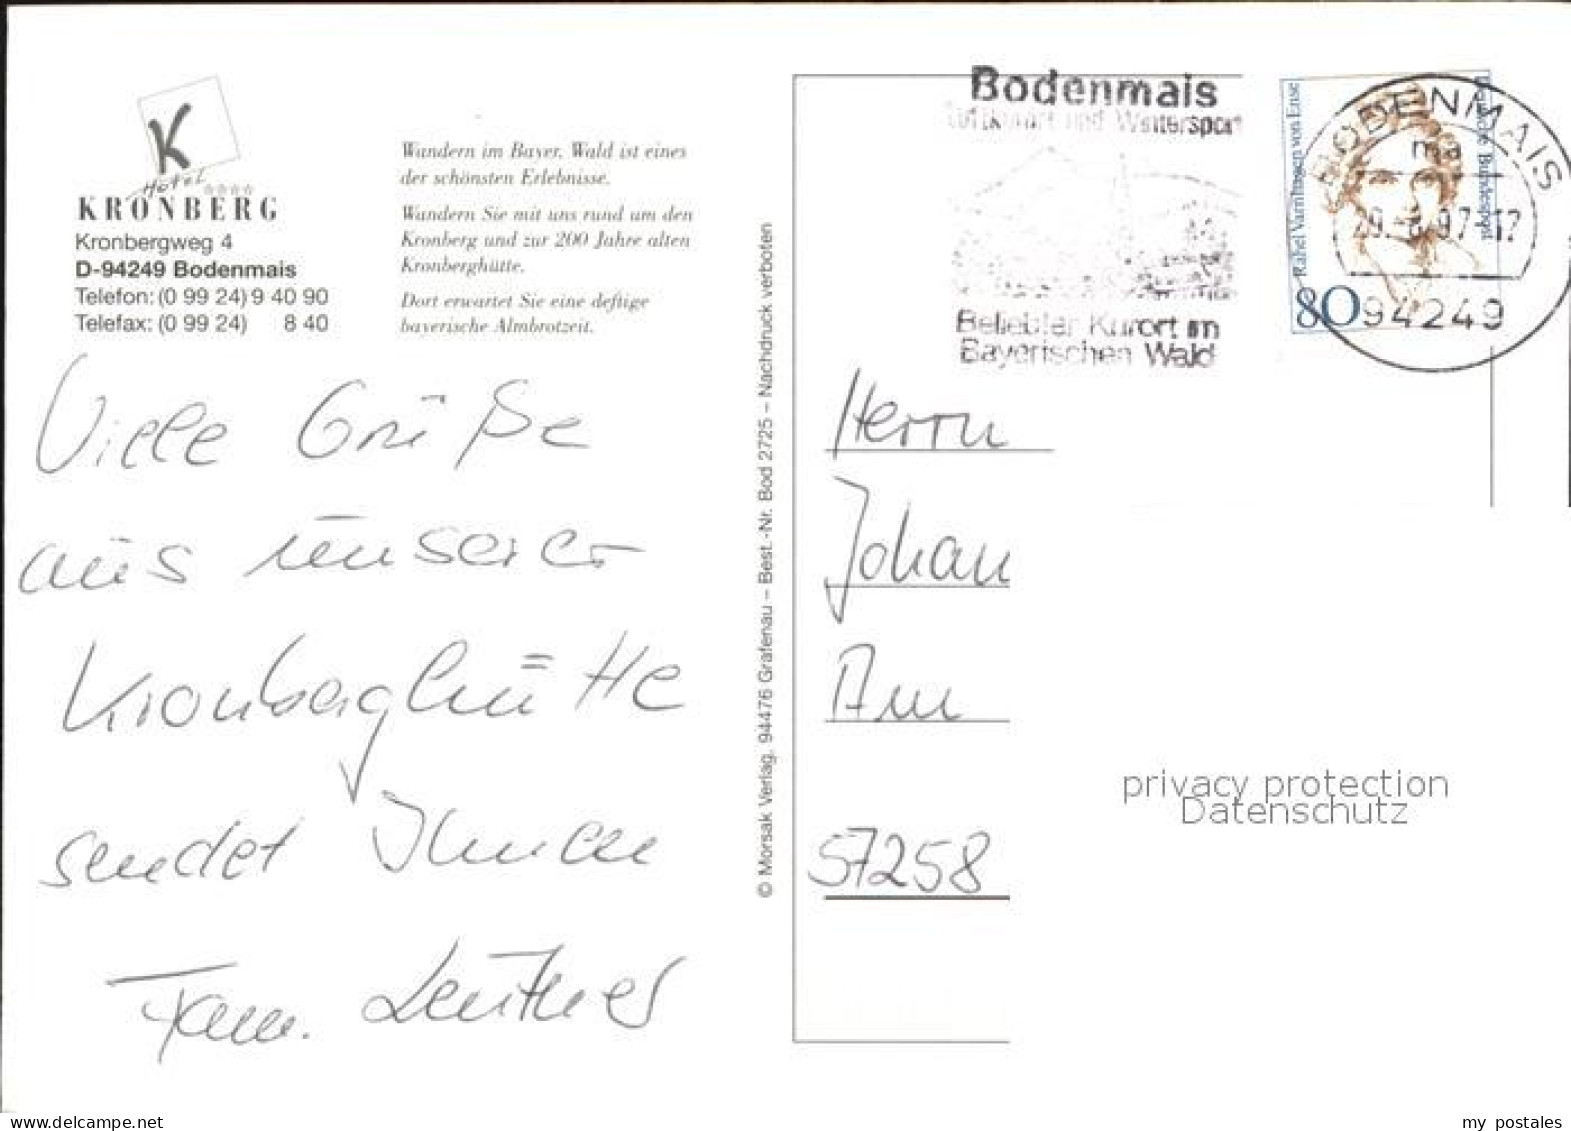 72517472 Bodenmais Kronberg Bayer. Wald  Bodenmais - Bodenmais